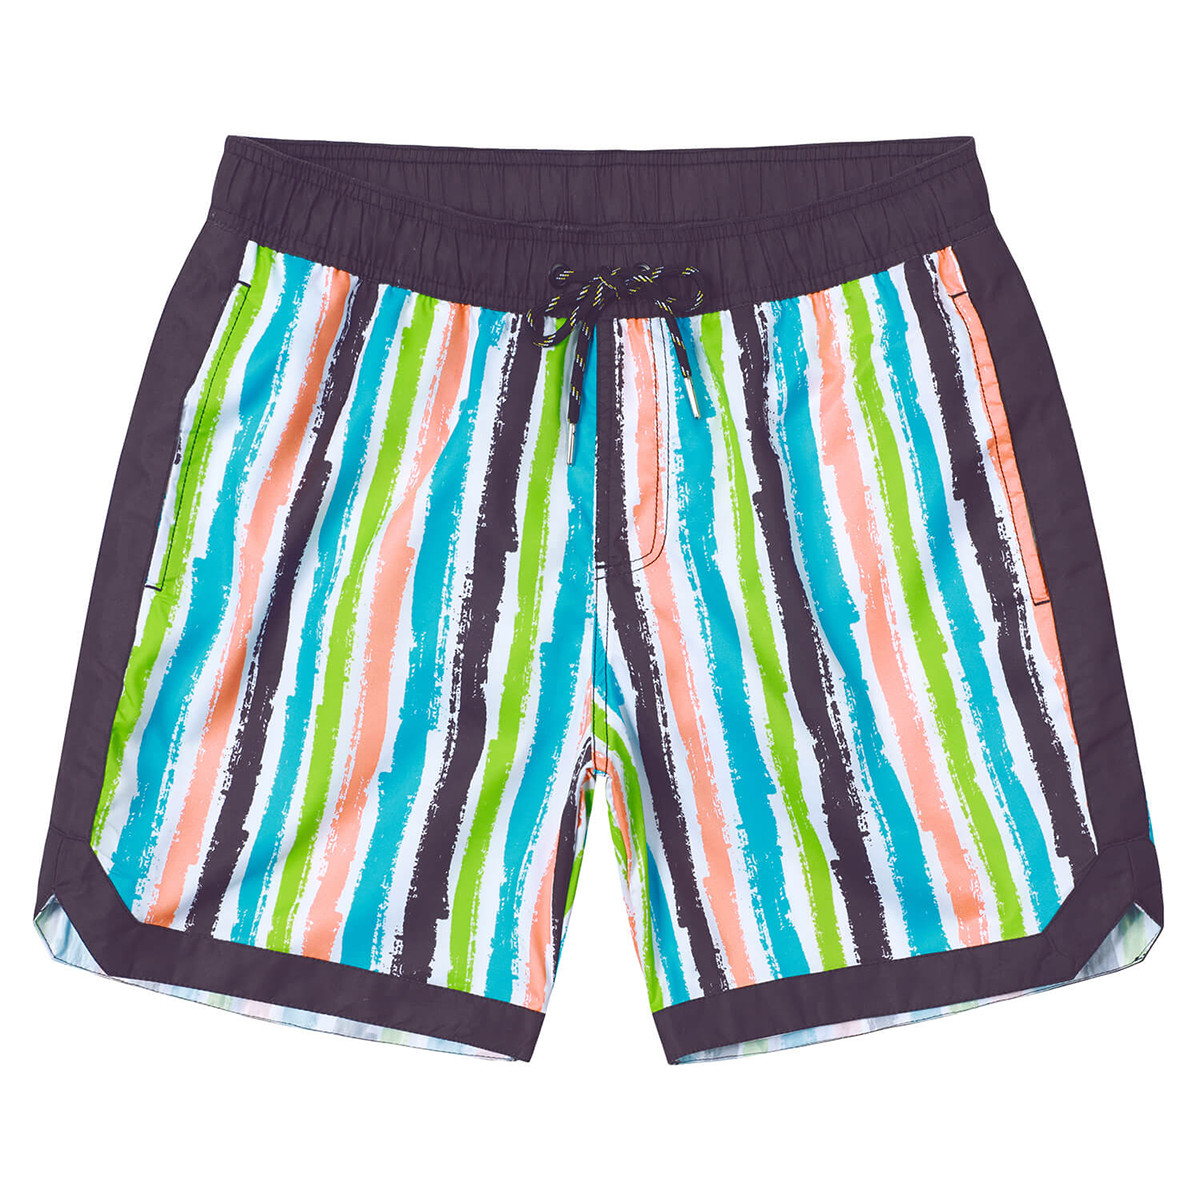 Men's Casual Retro Striped Summer Quick Dry Swimming Trunks